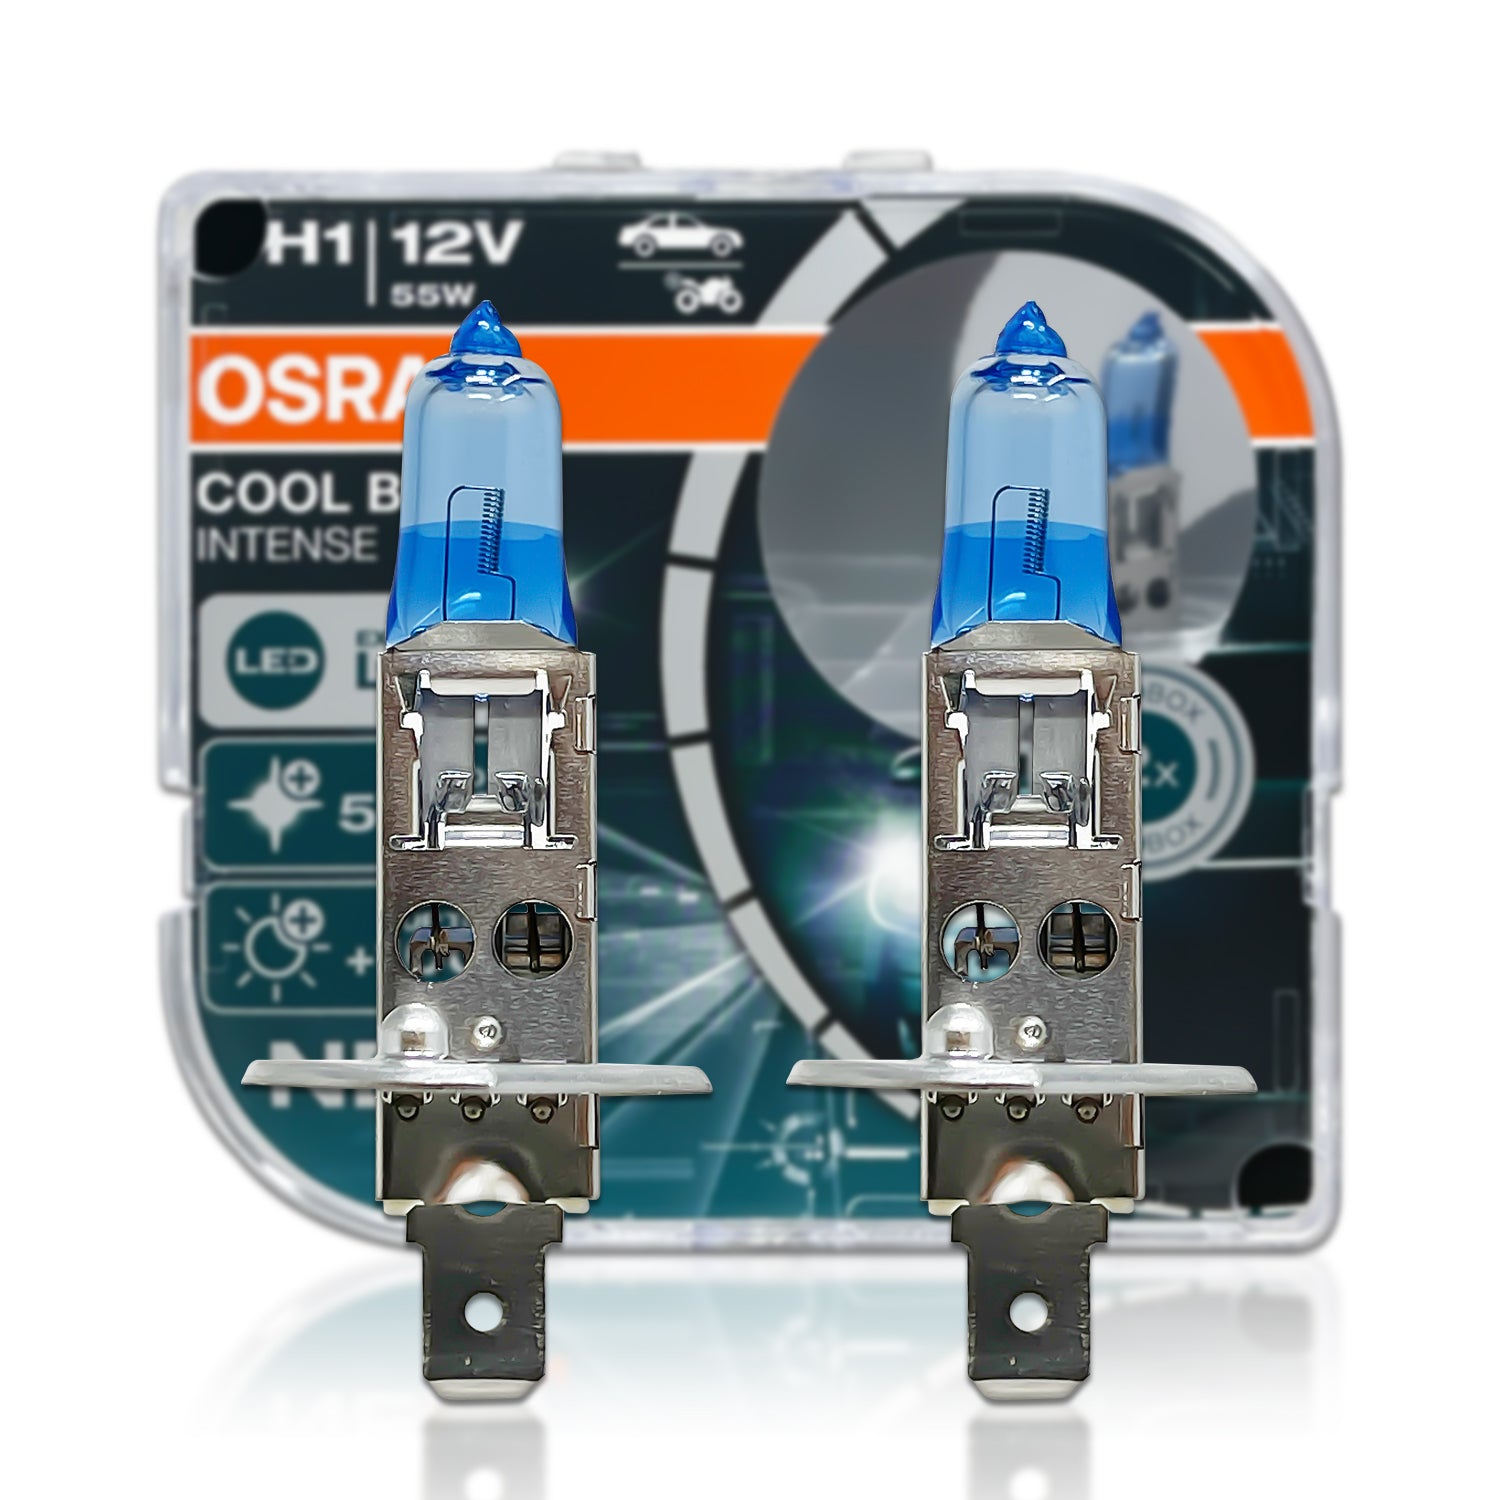 Philips Xtreme Ultionon H1 LED +200% VS Standard H1 Halogen 55w 